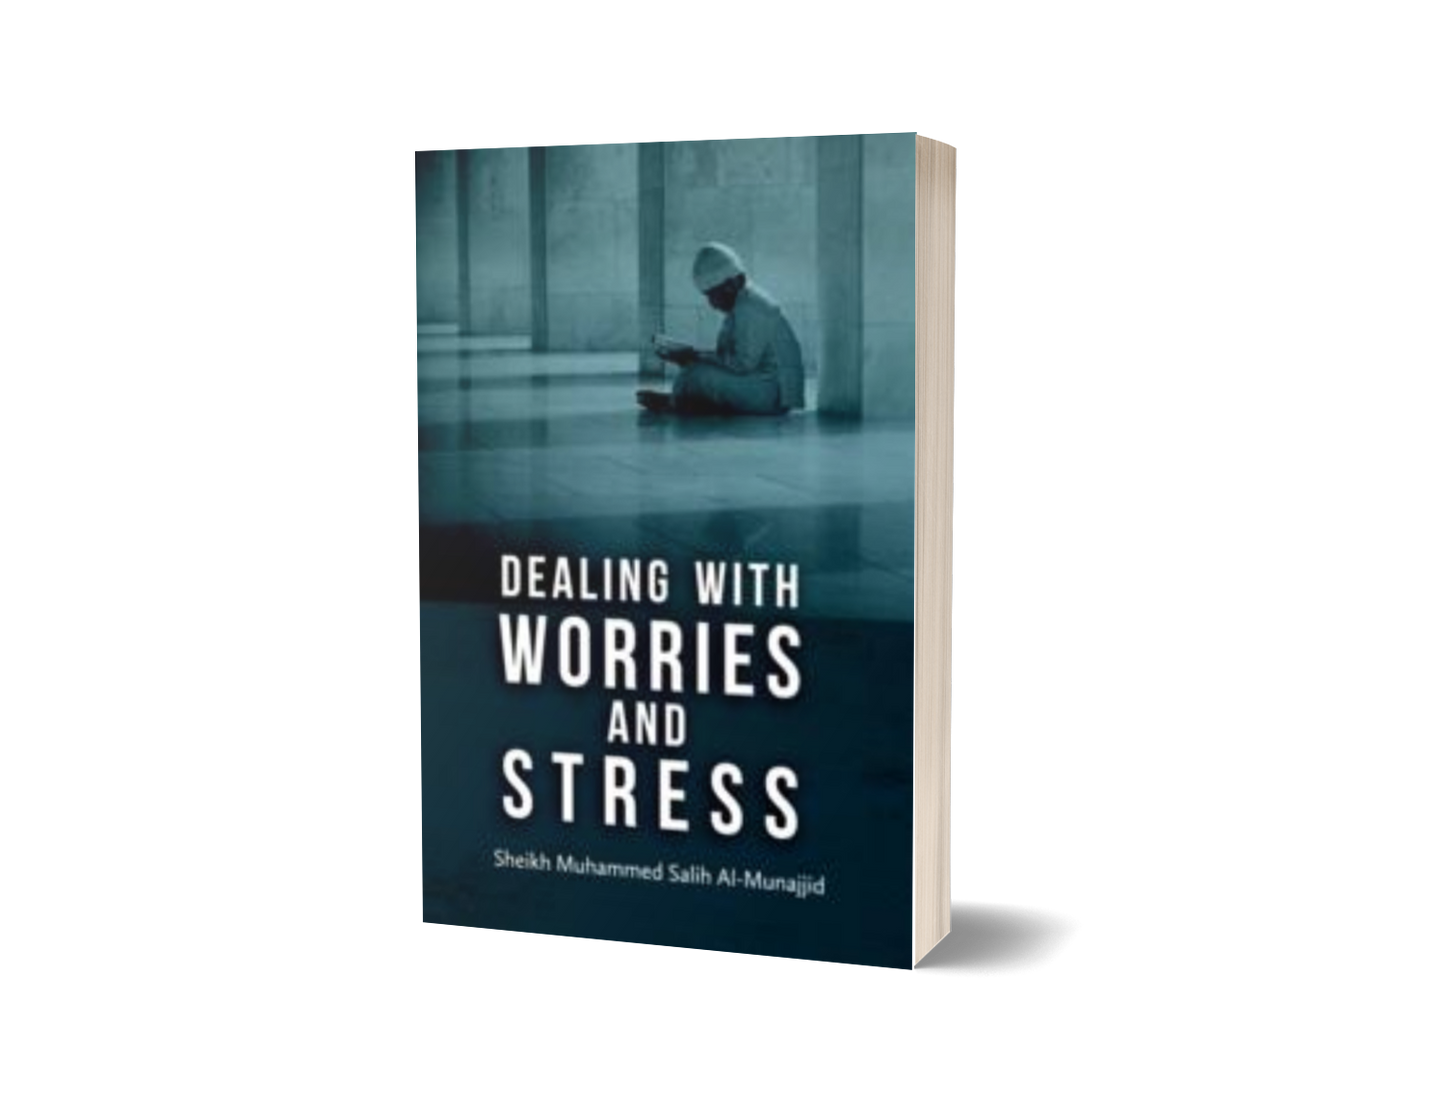 Dealing with Worries and Stress by Sheikh Muhammad Salih Al-Munajjid